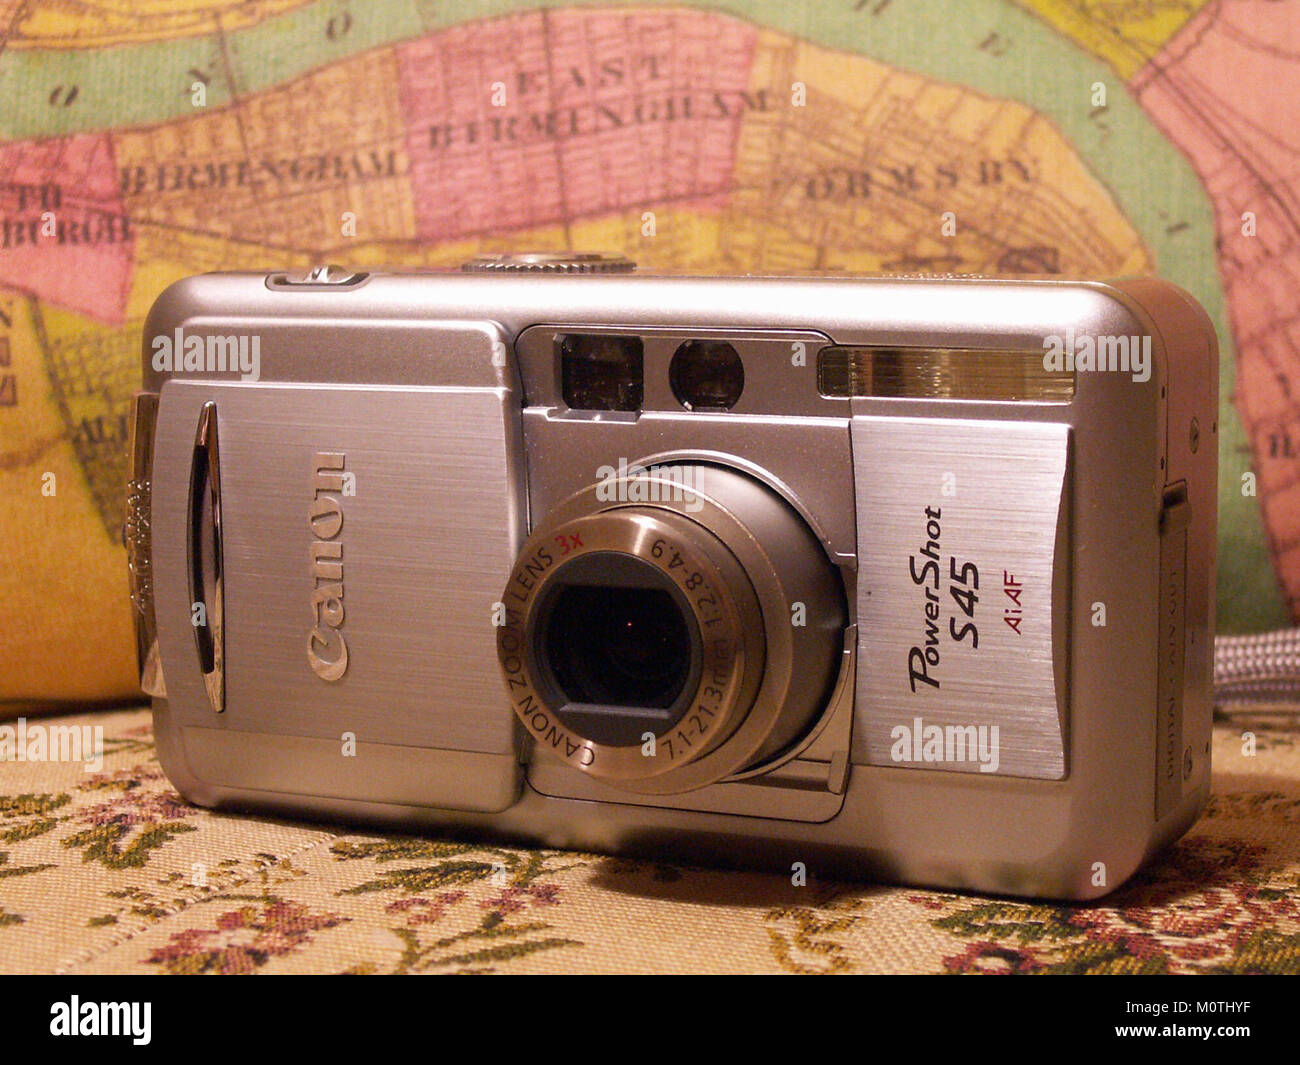 Canon PowerShot S45 digital camera Stock Photo